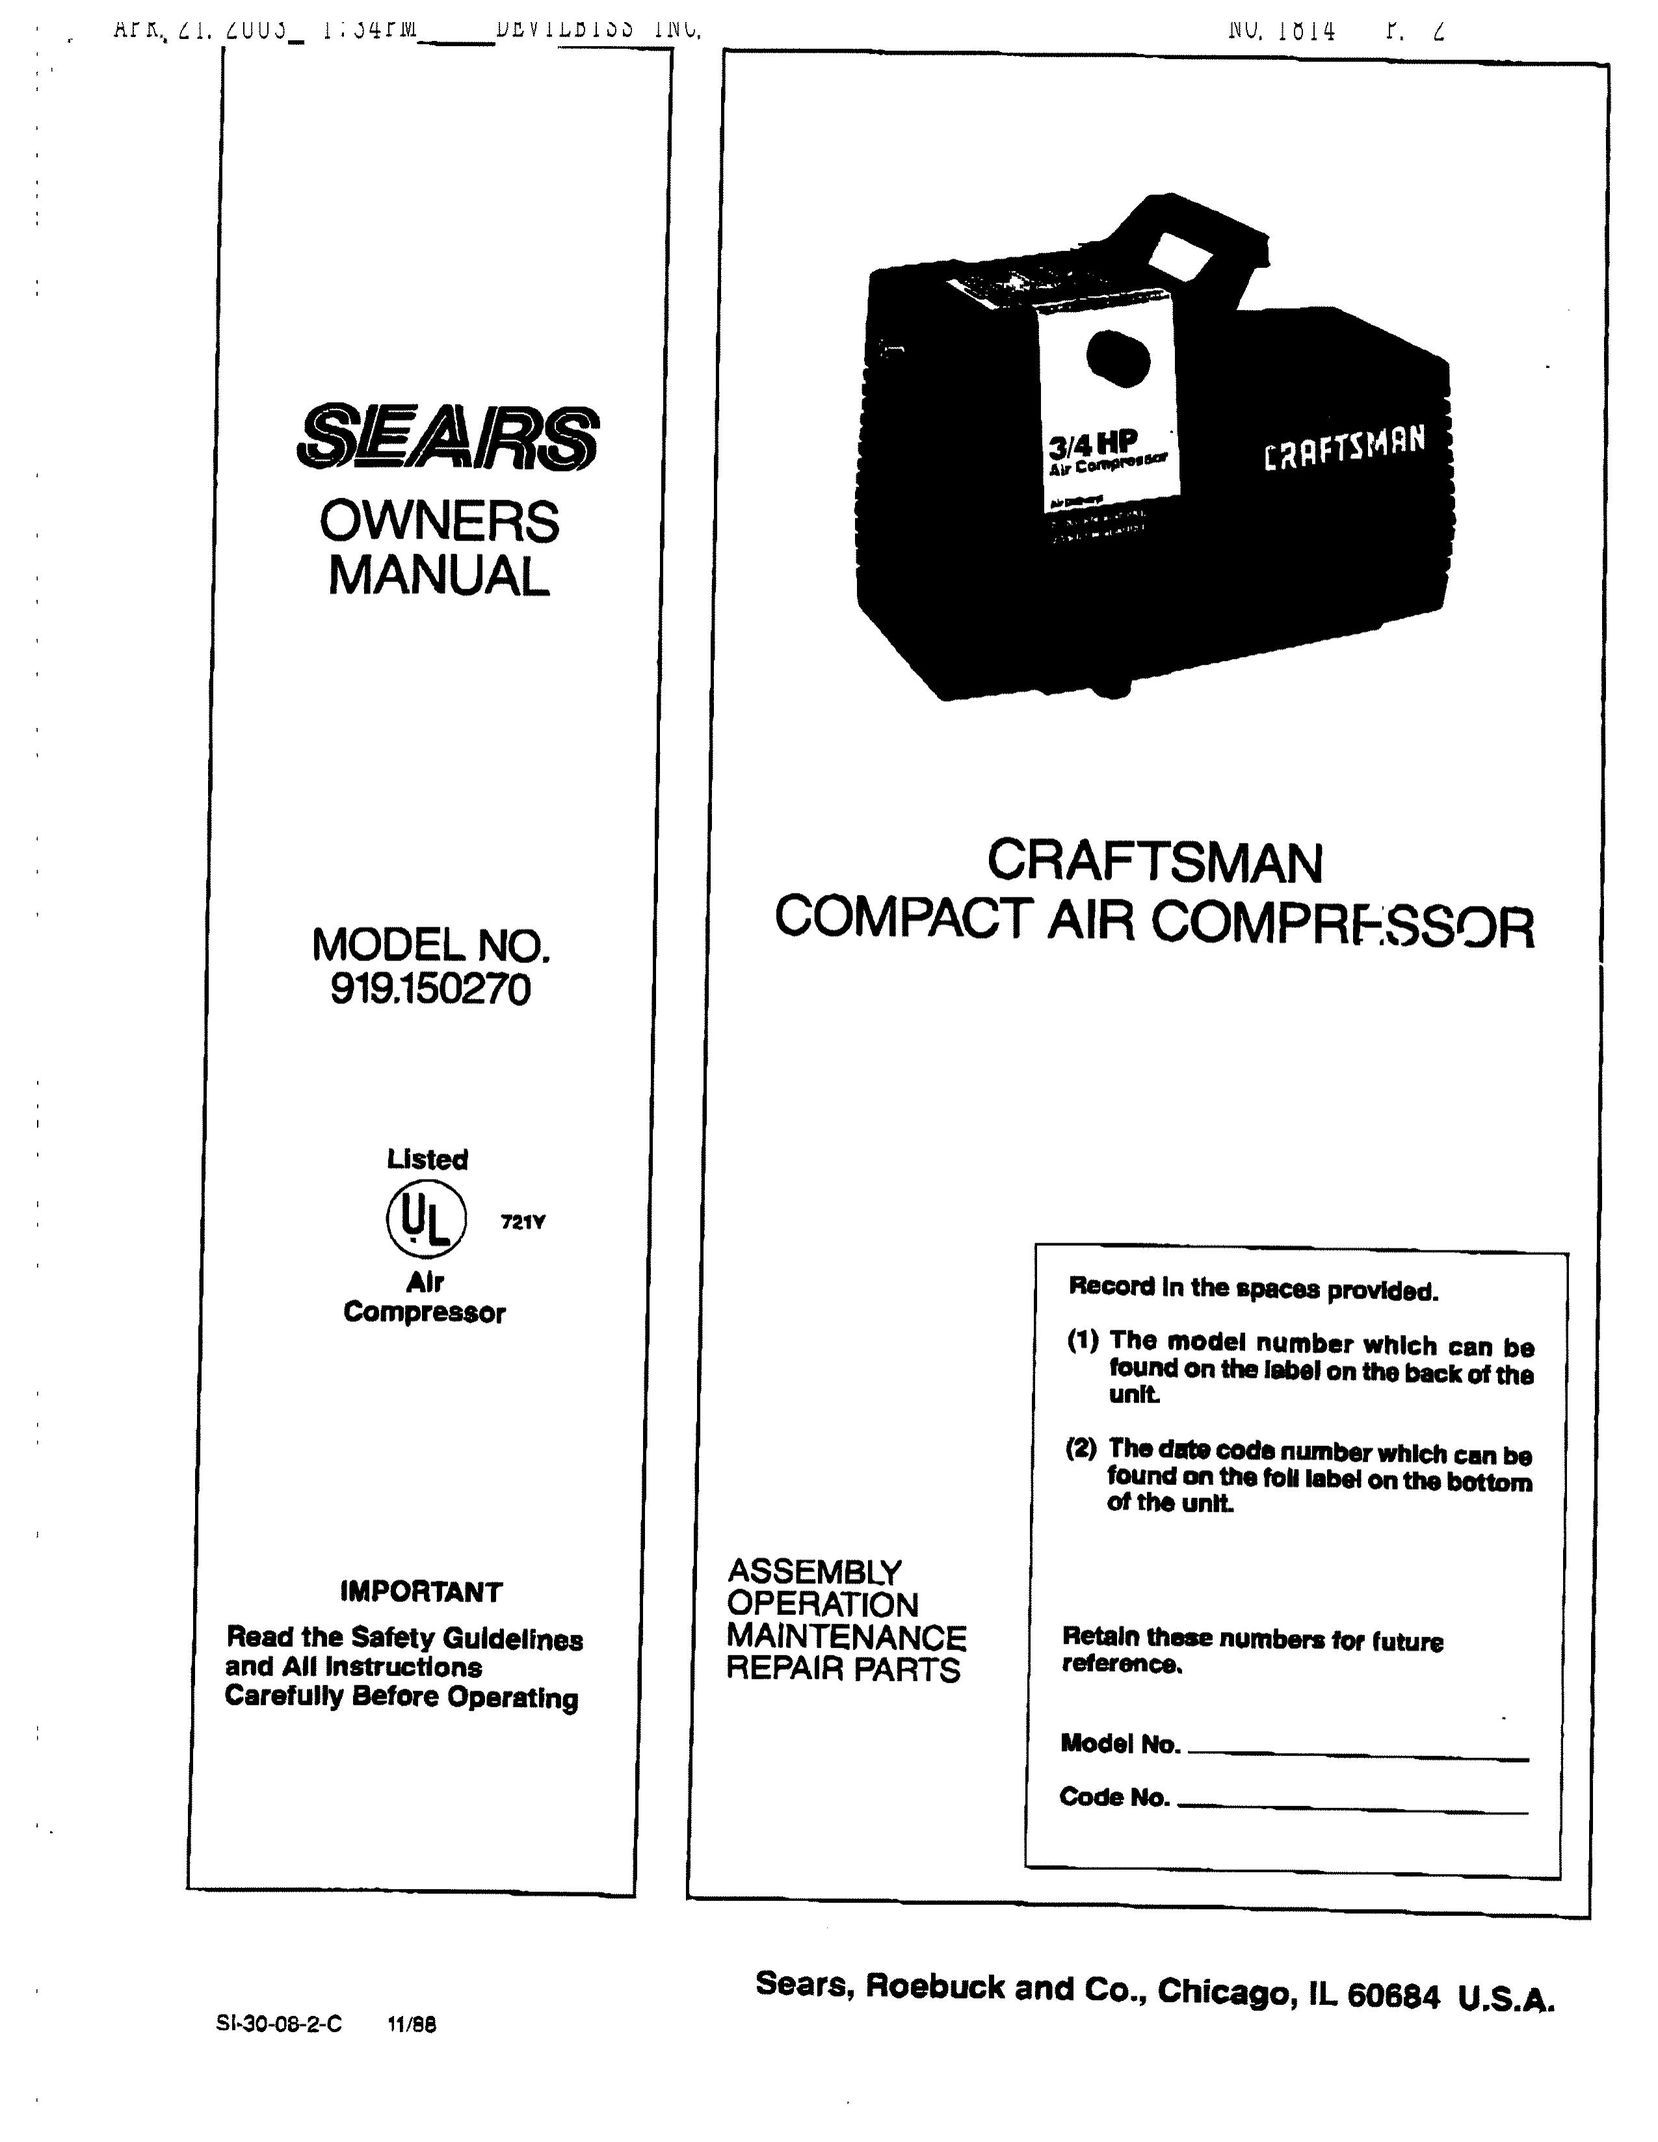 Sears 919.150270 Air Compressor User Manual